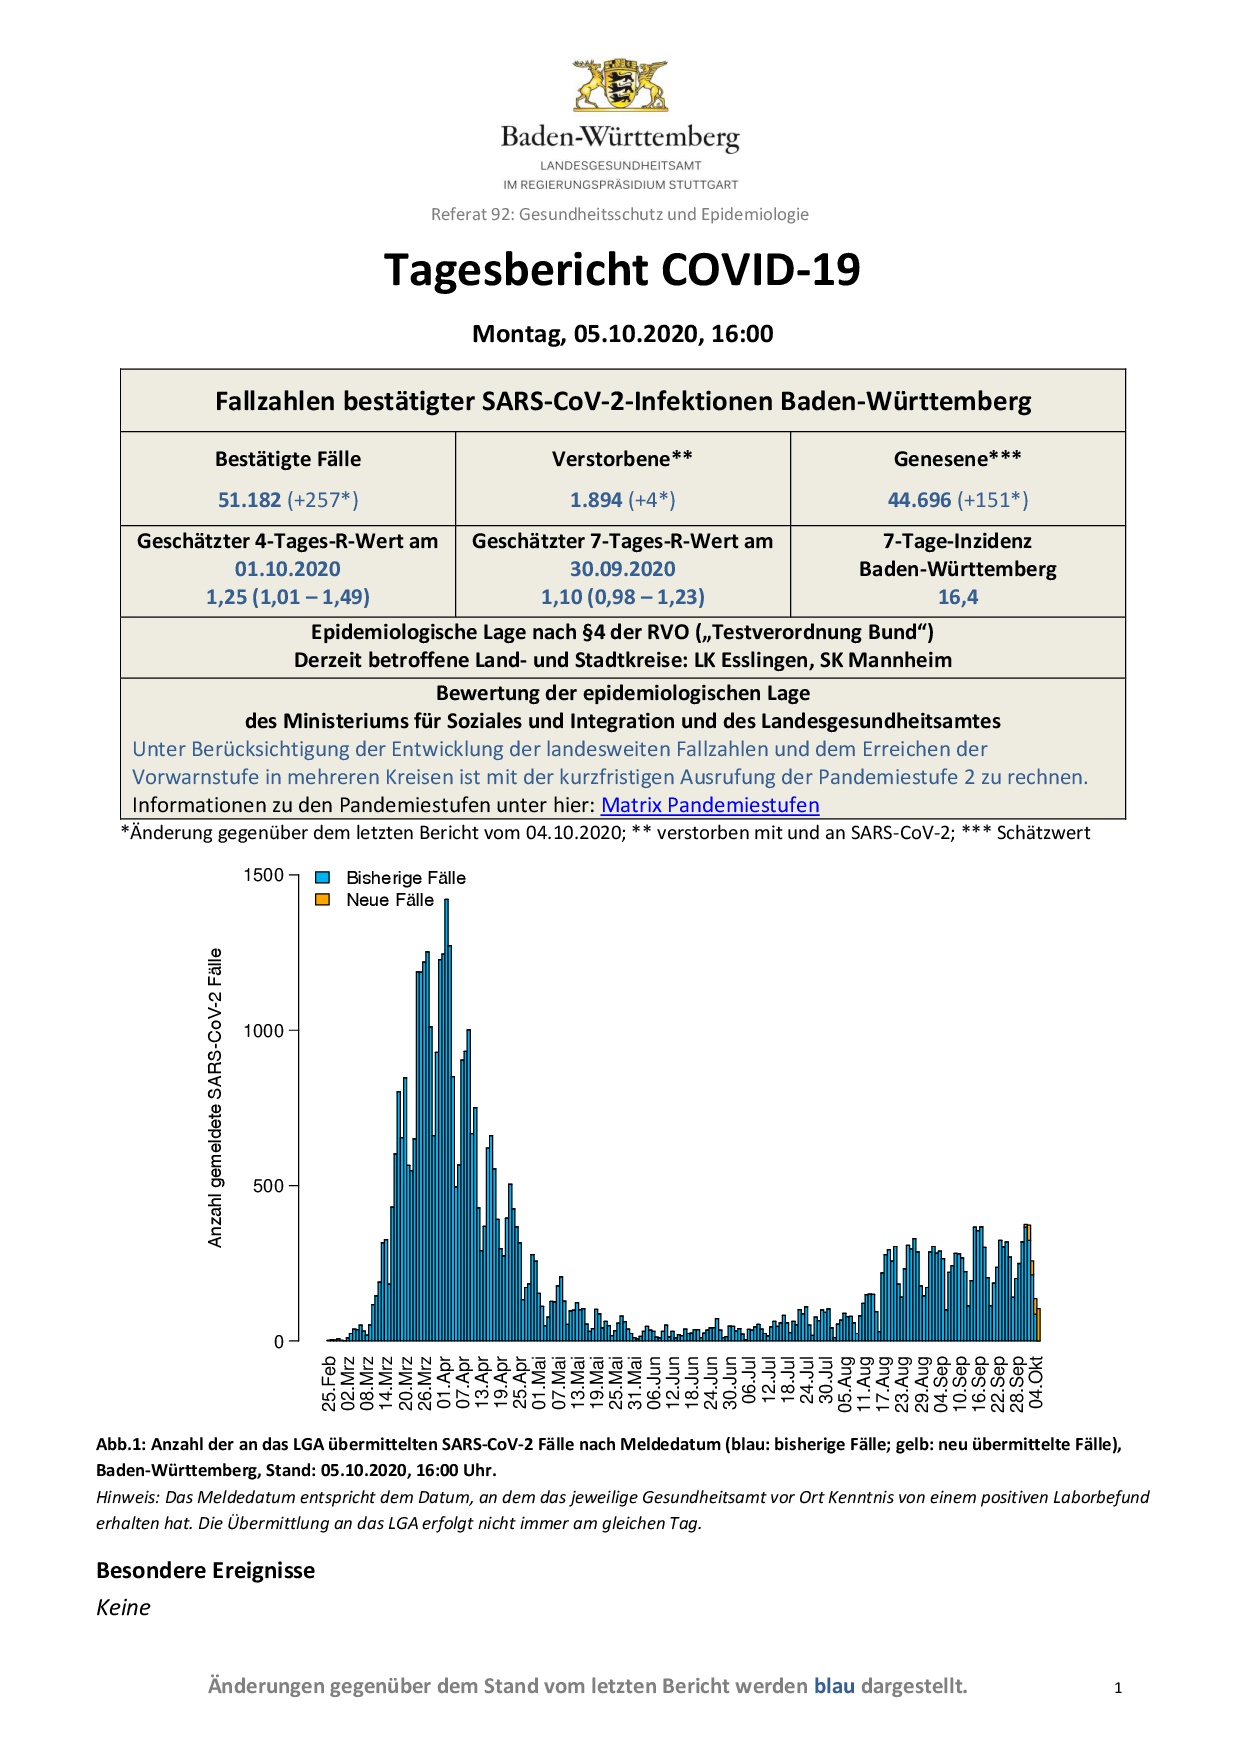 COVID-19 Tagesbericht (05.10.2020) des Landesgesundheitsamts Baden-Württemberg